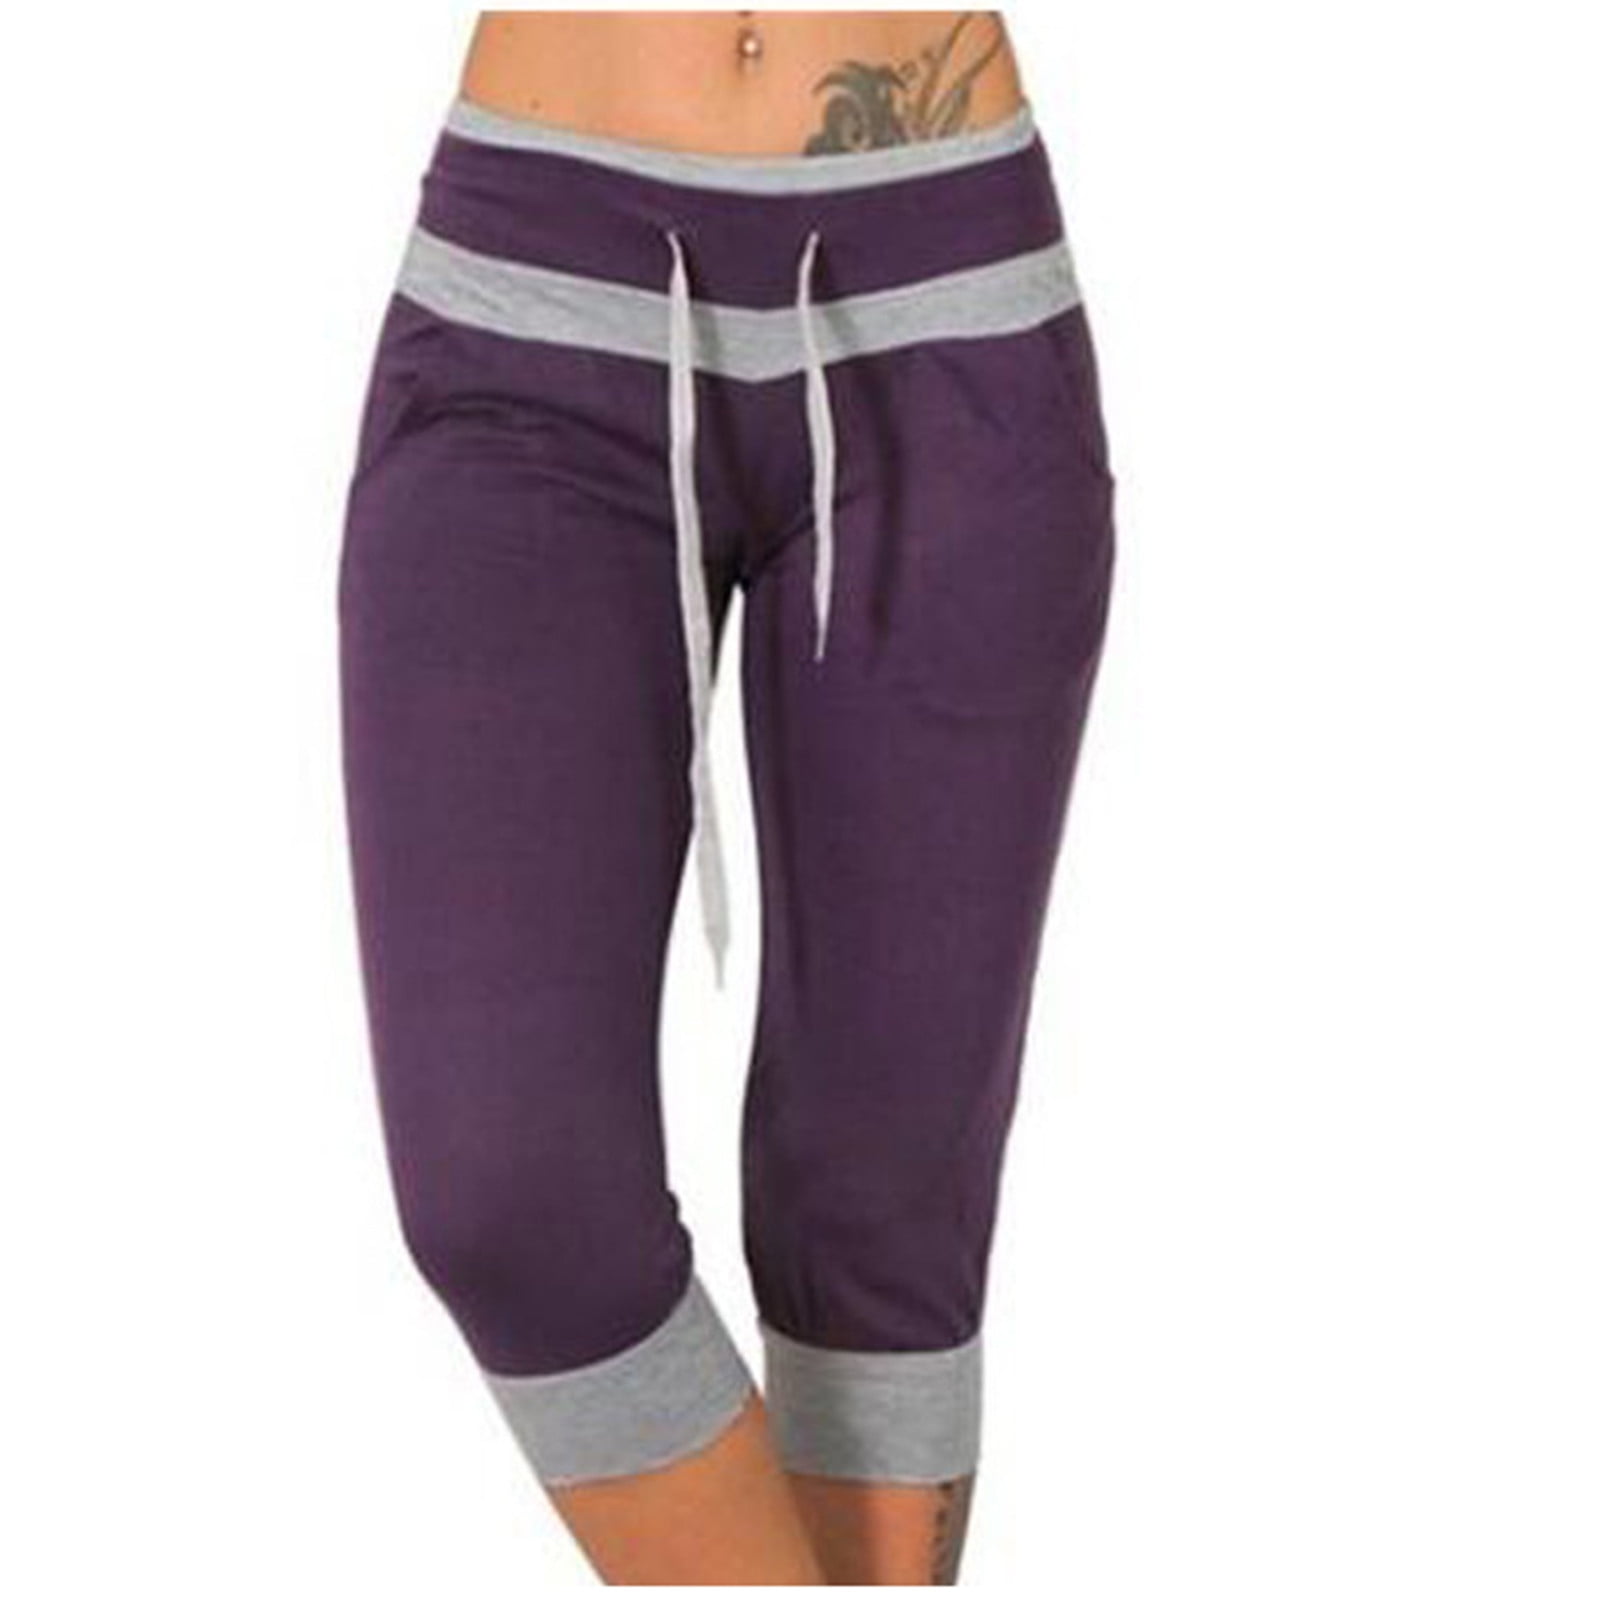 Plus Size Capri Pants for Women Workout Joggers Capris Slacks Stretch  Athletic Yoga Pants High Waisted Drawstring (3X-Large, Purple)